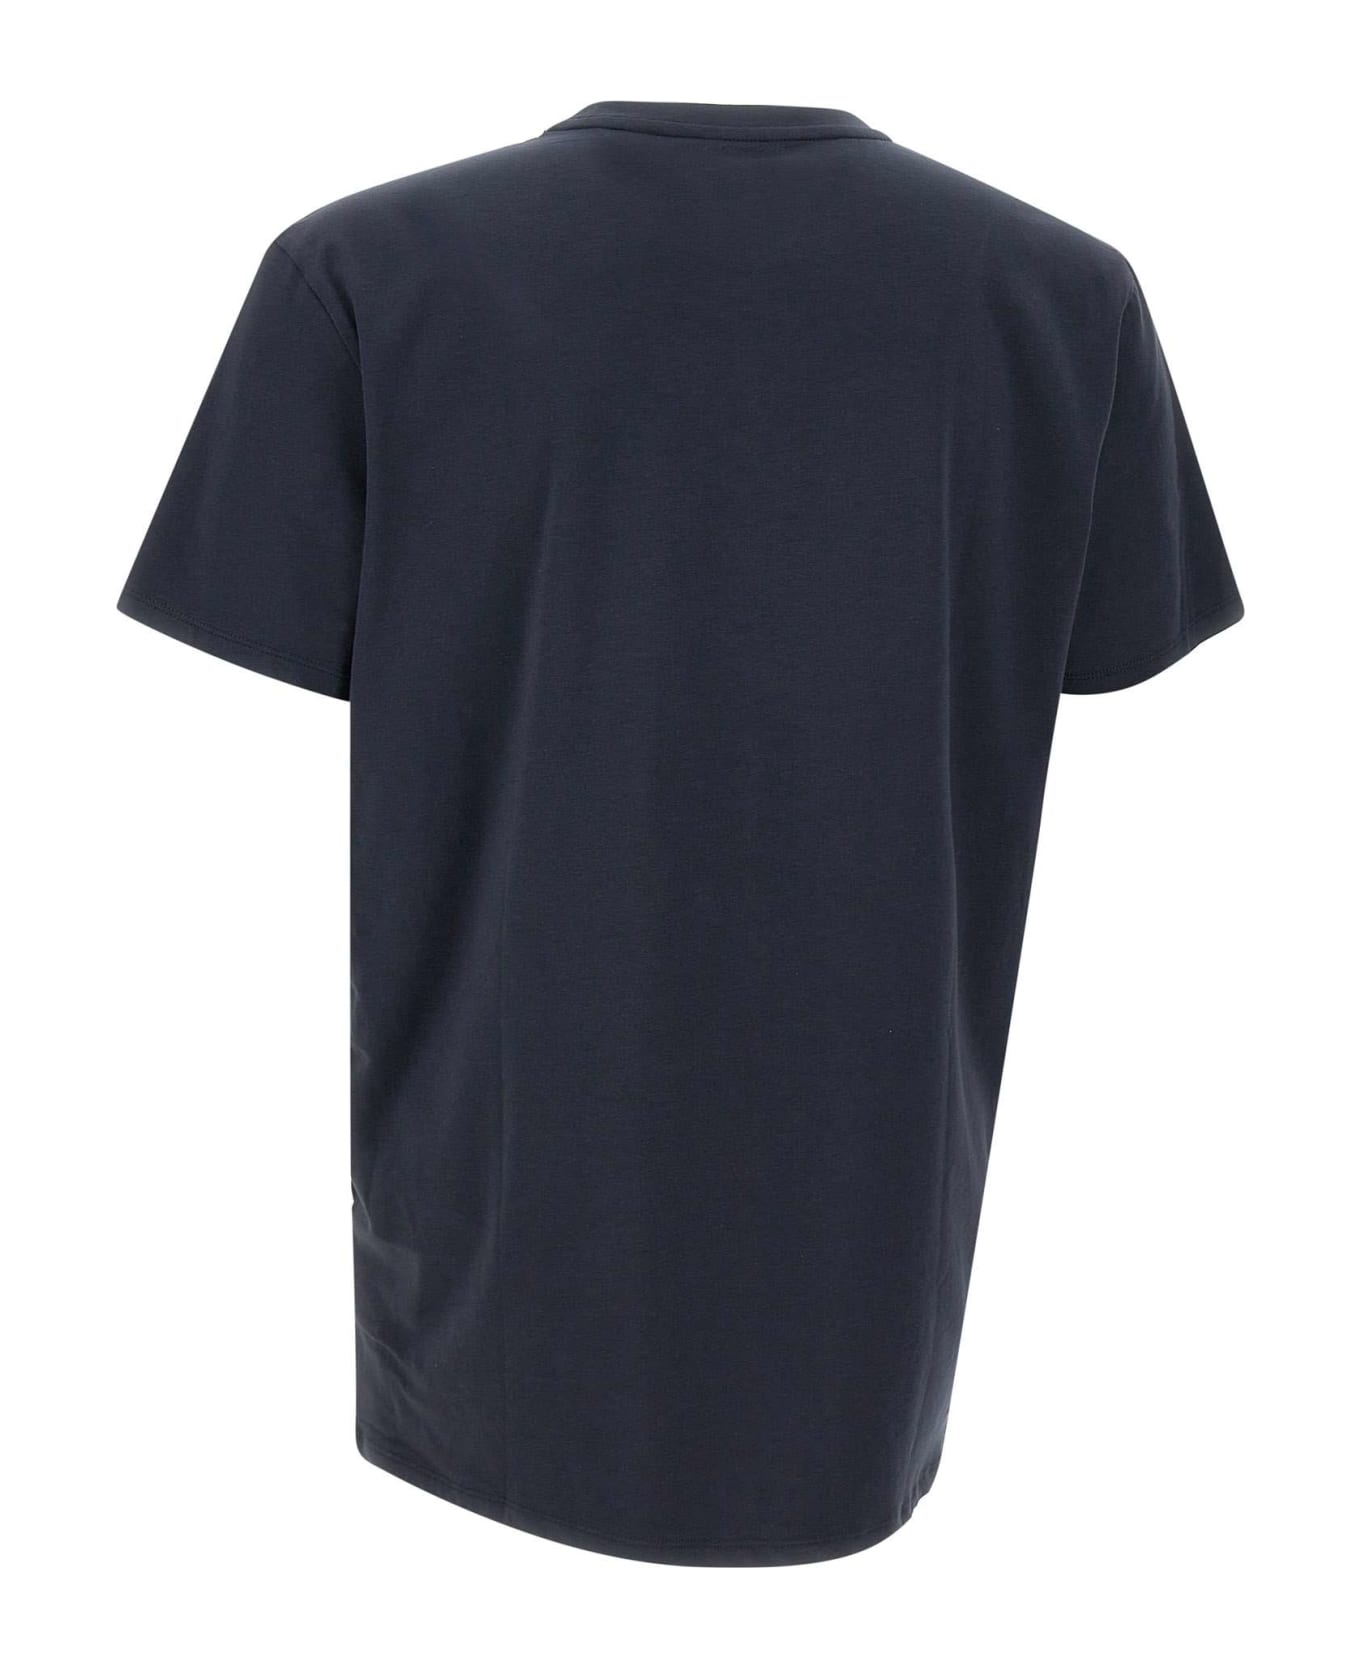 RRD - Roberto Ricci Design 'revo Shirty' T-shirt - Blue Black